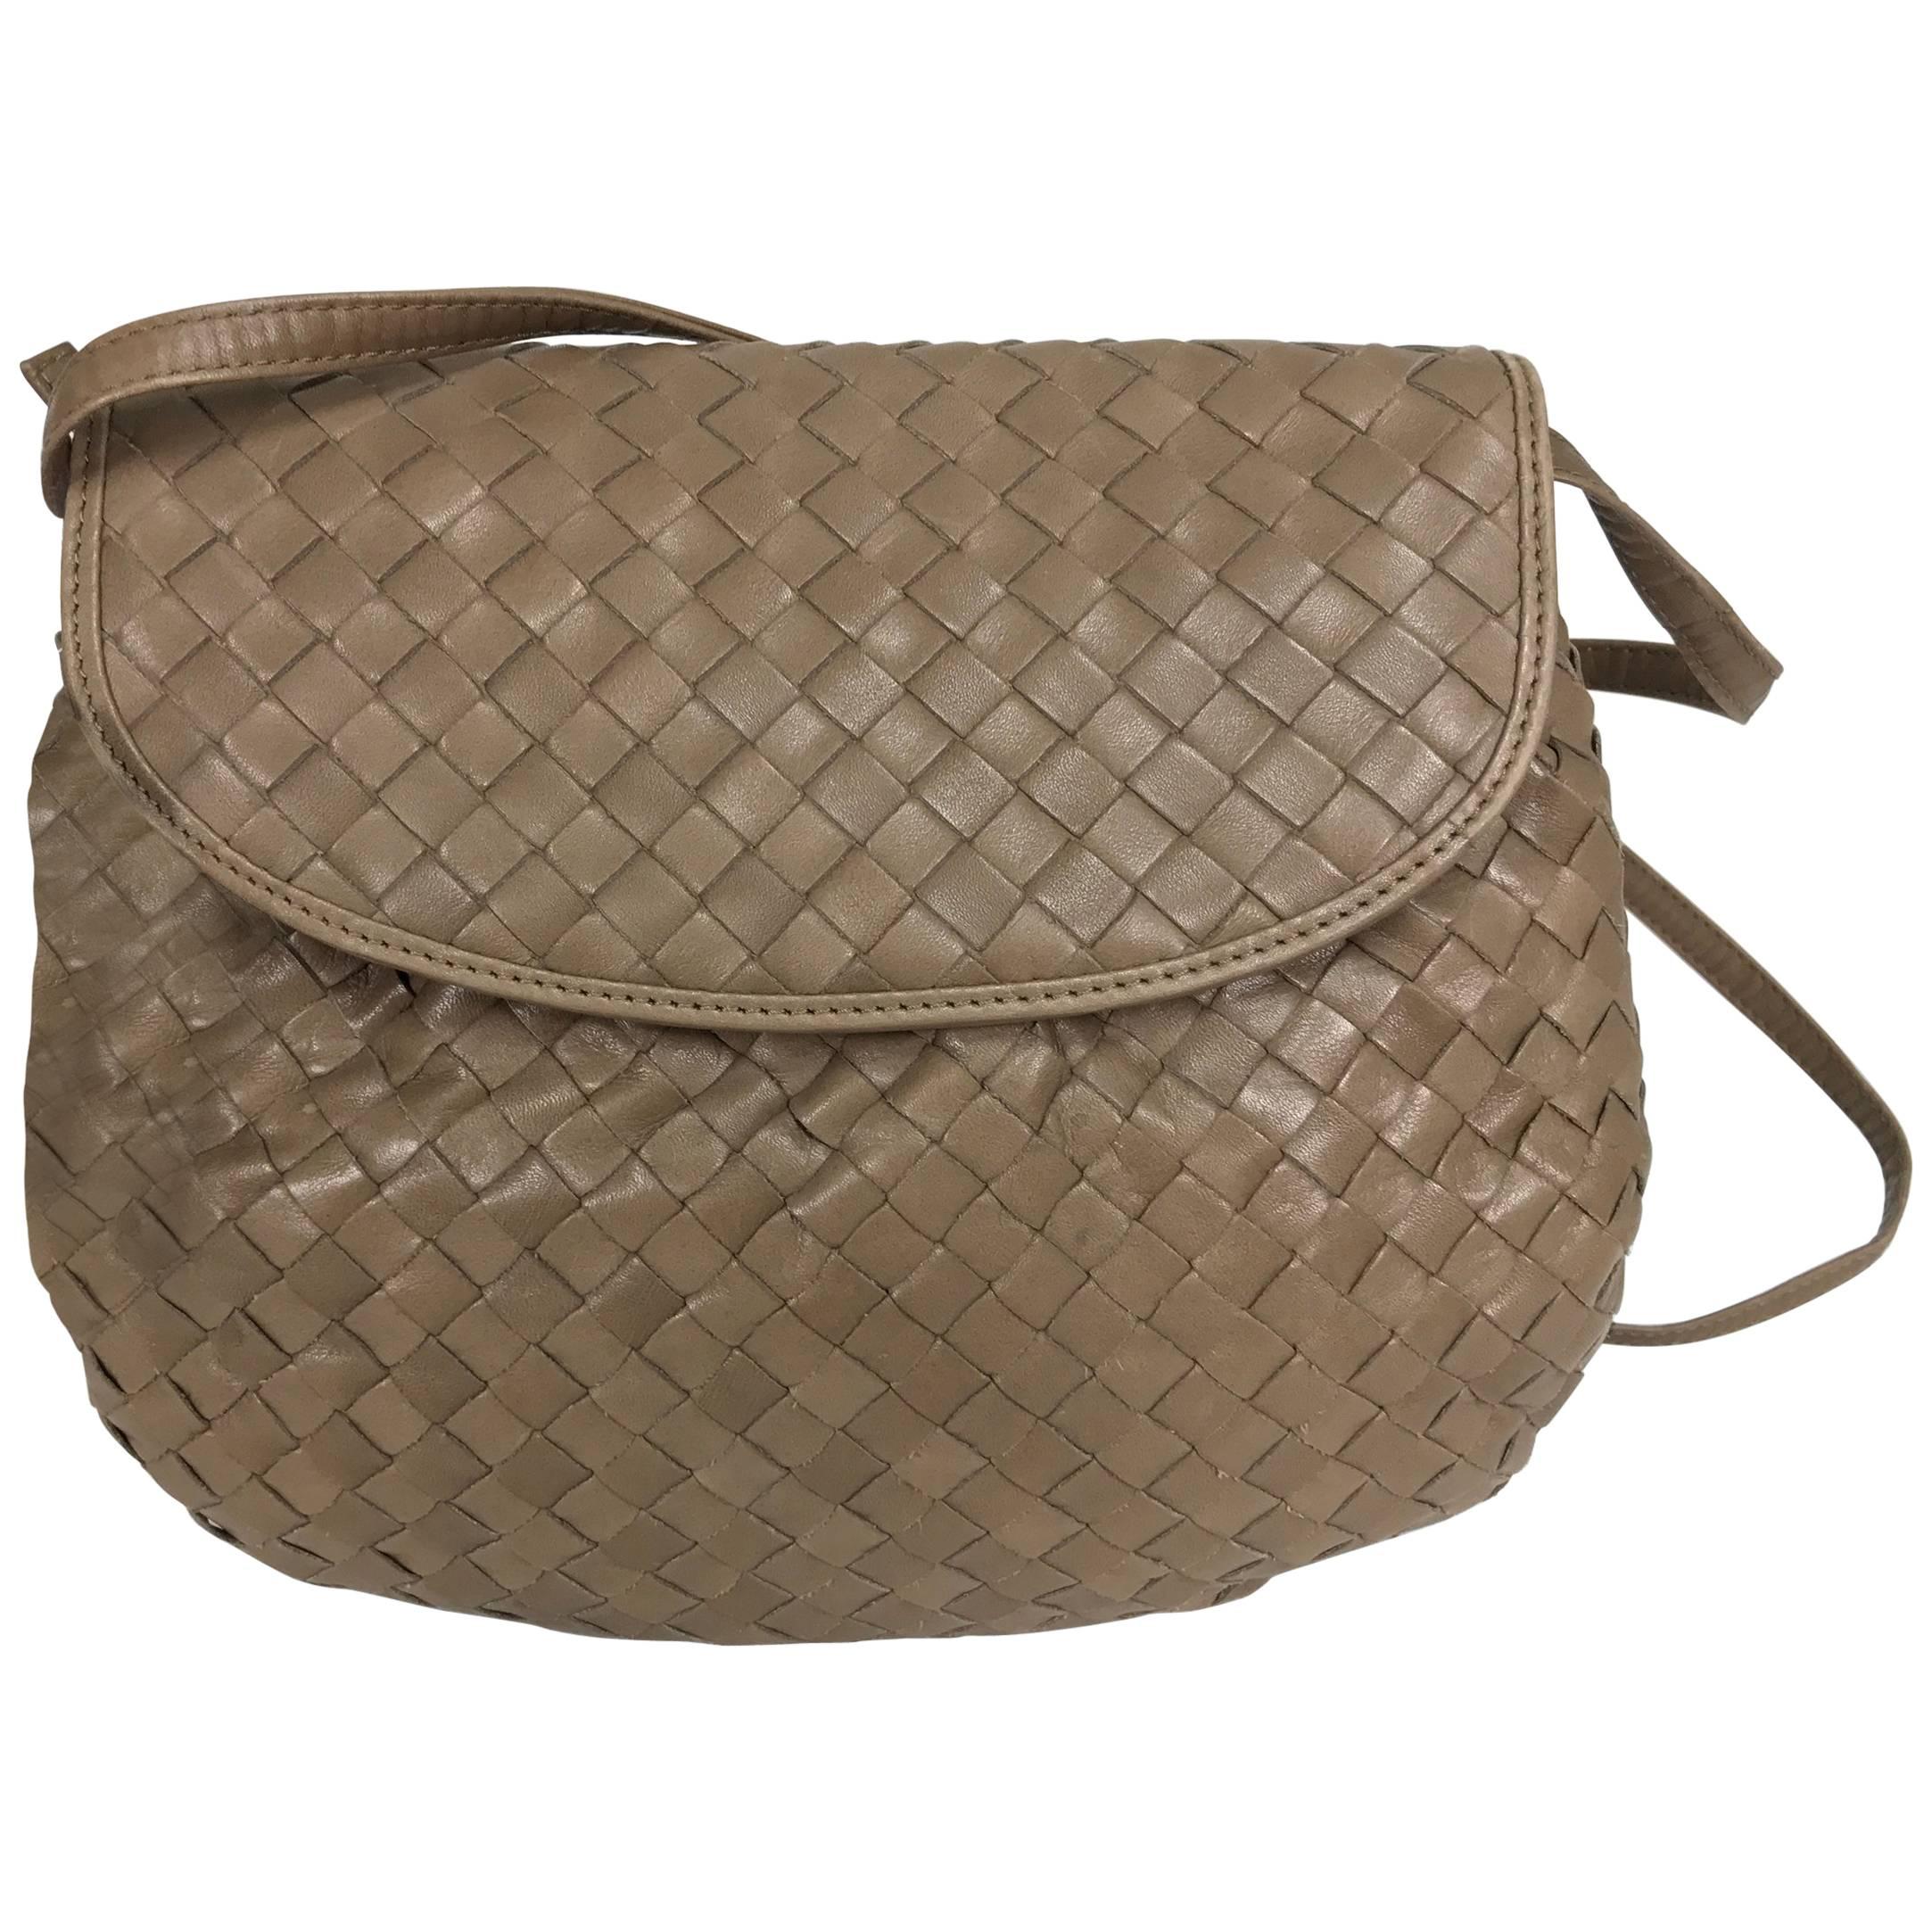 Bottega Veneta Intrecciato cocoa leather shoulder clutch handbag 1980s NWT